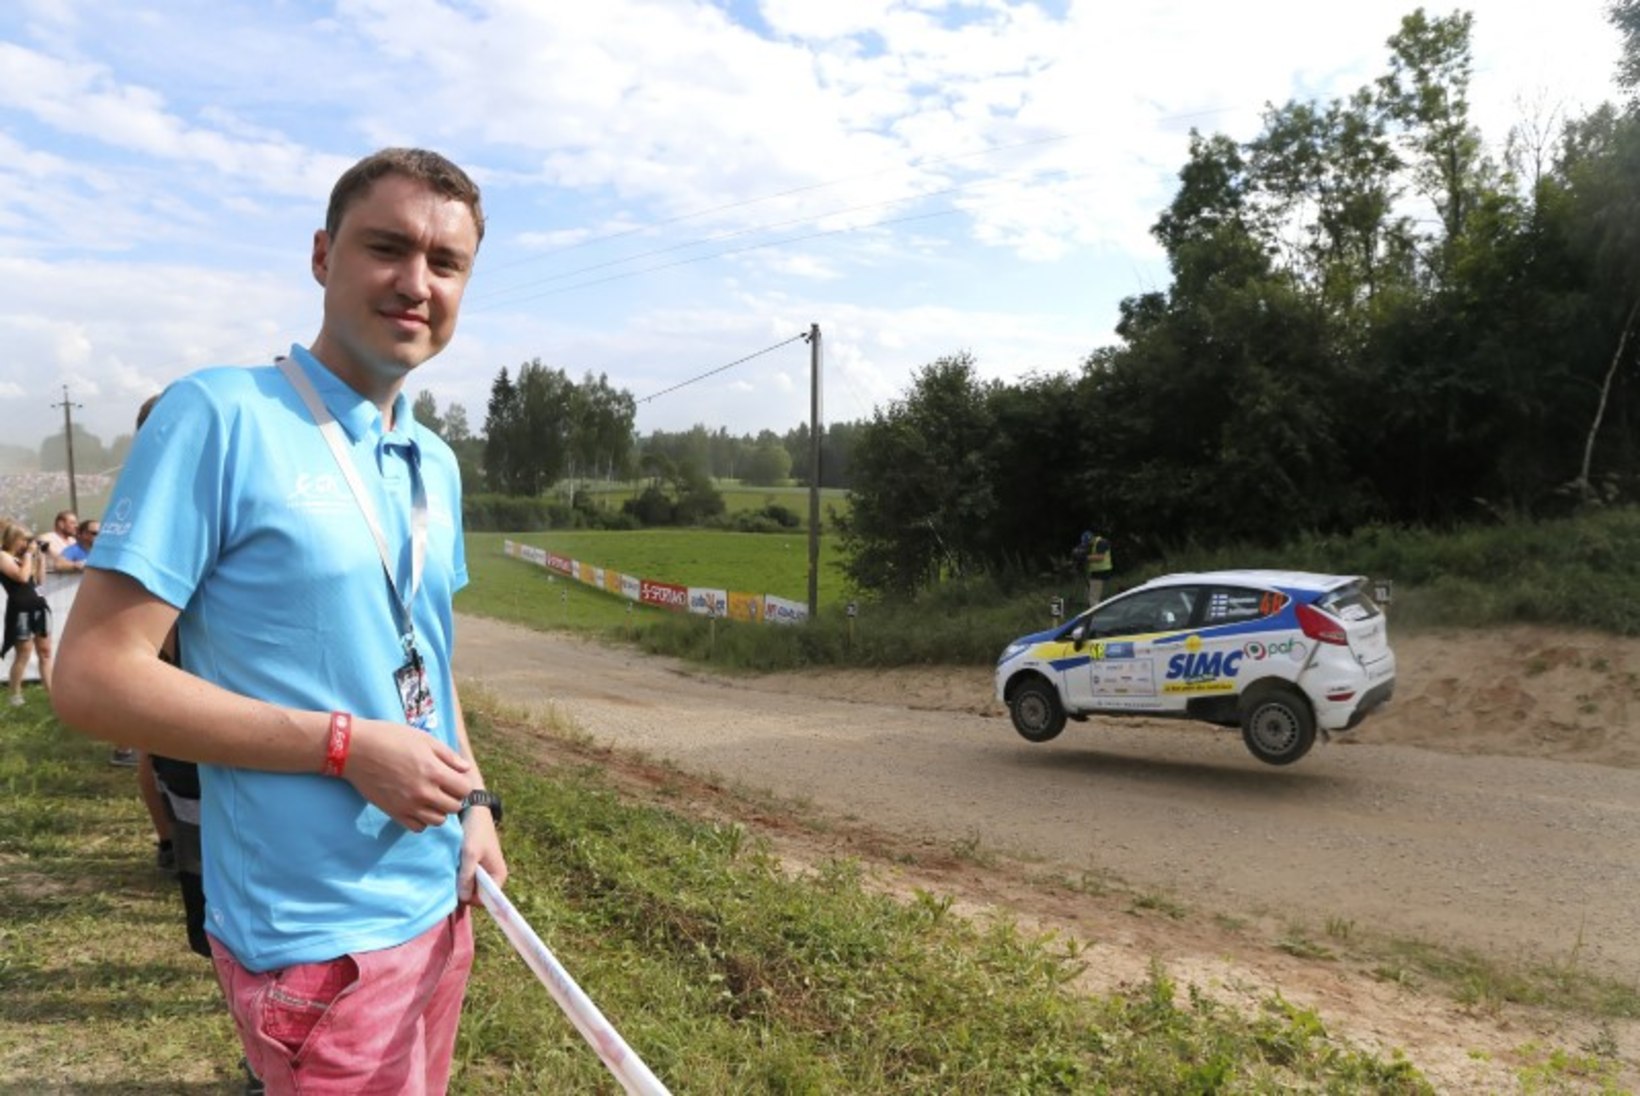 VIDEO | Eesti peaminister on rallisõber - Taavi Rõivas Rally Estonial